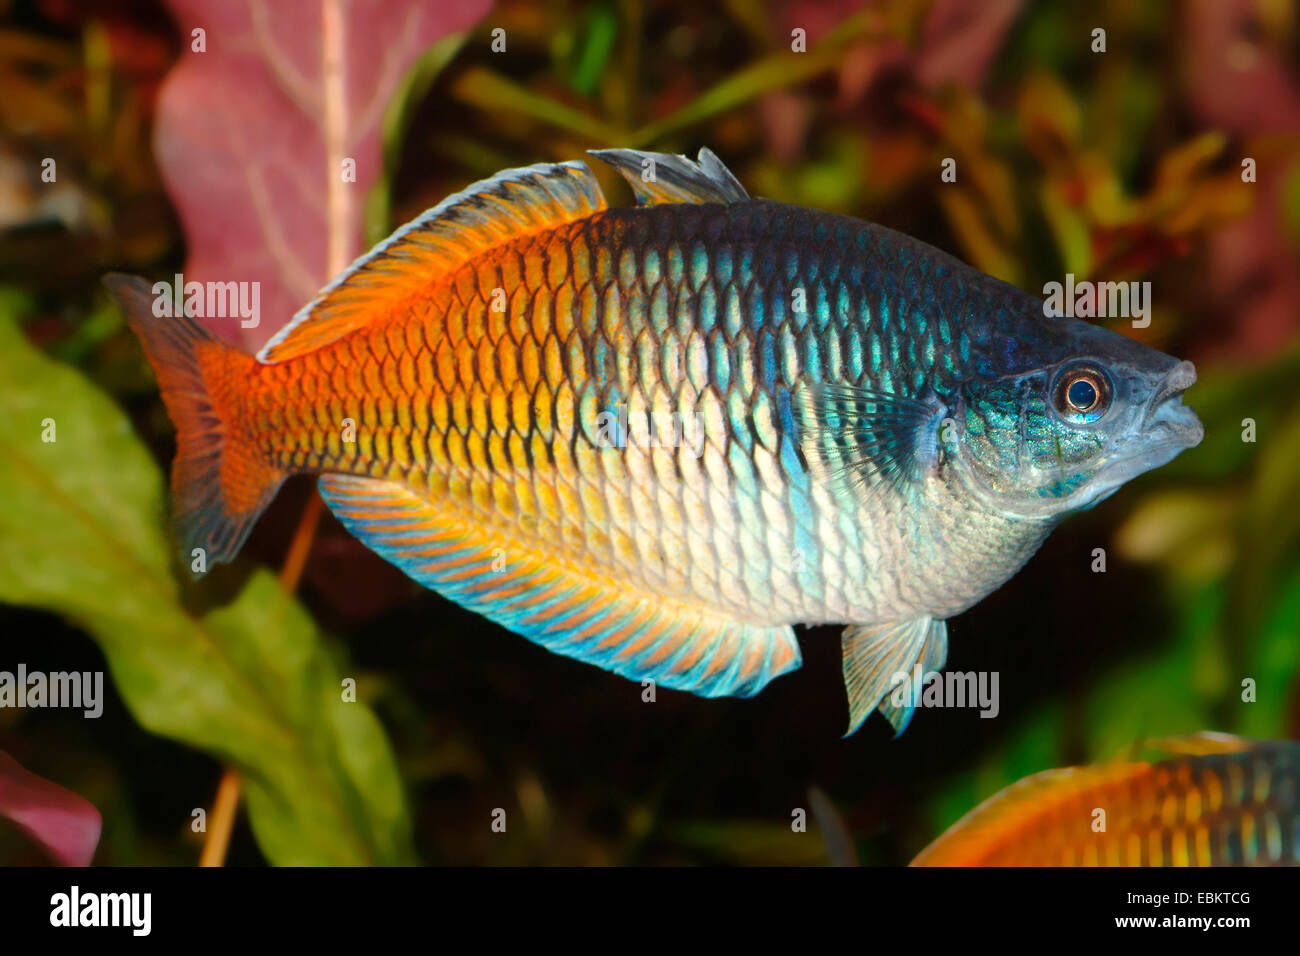 Boeseman's rainbowfish, Boesemani rainbowfish (Melanotaenia boesemani), full length portrait Stock Photo